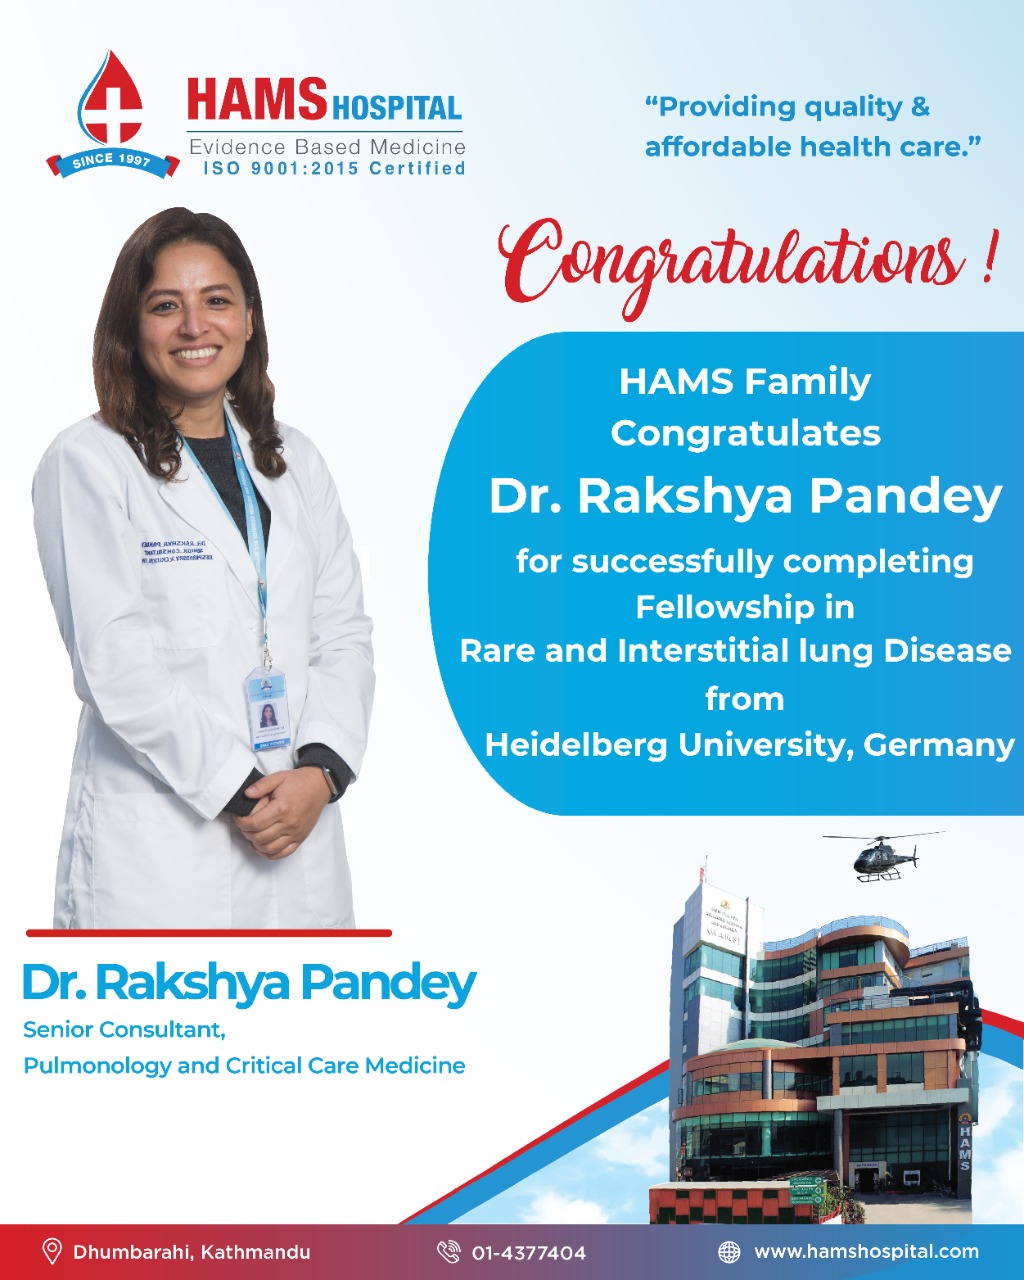 Hams family congratulates Dr. Rakshya Pandey